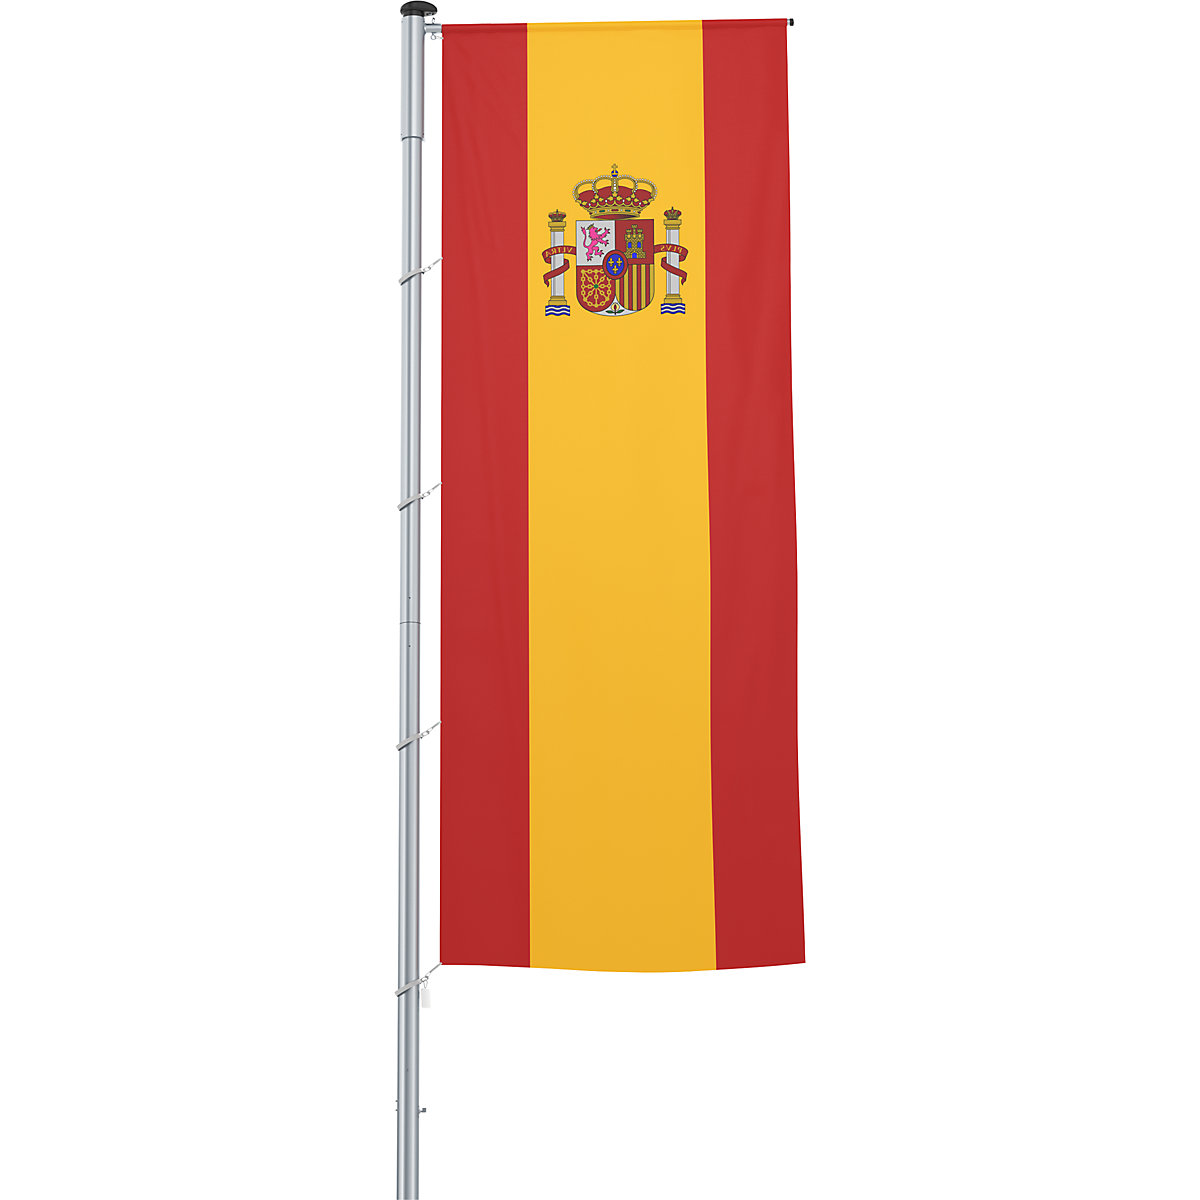 Mannus – Bandera con pluma/bandera del país, formato 1,2 x 3 m, España